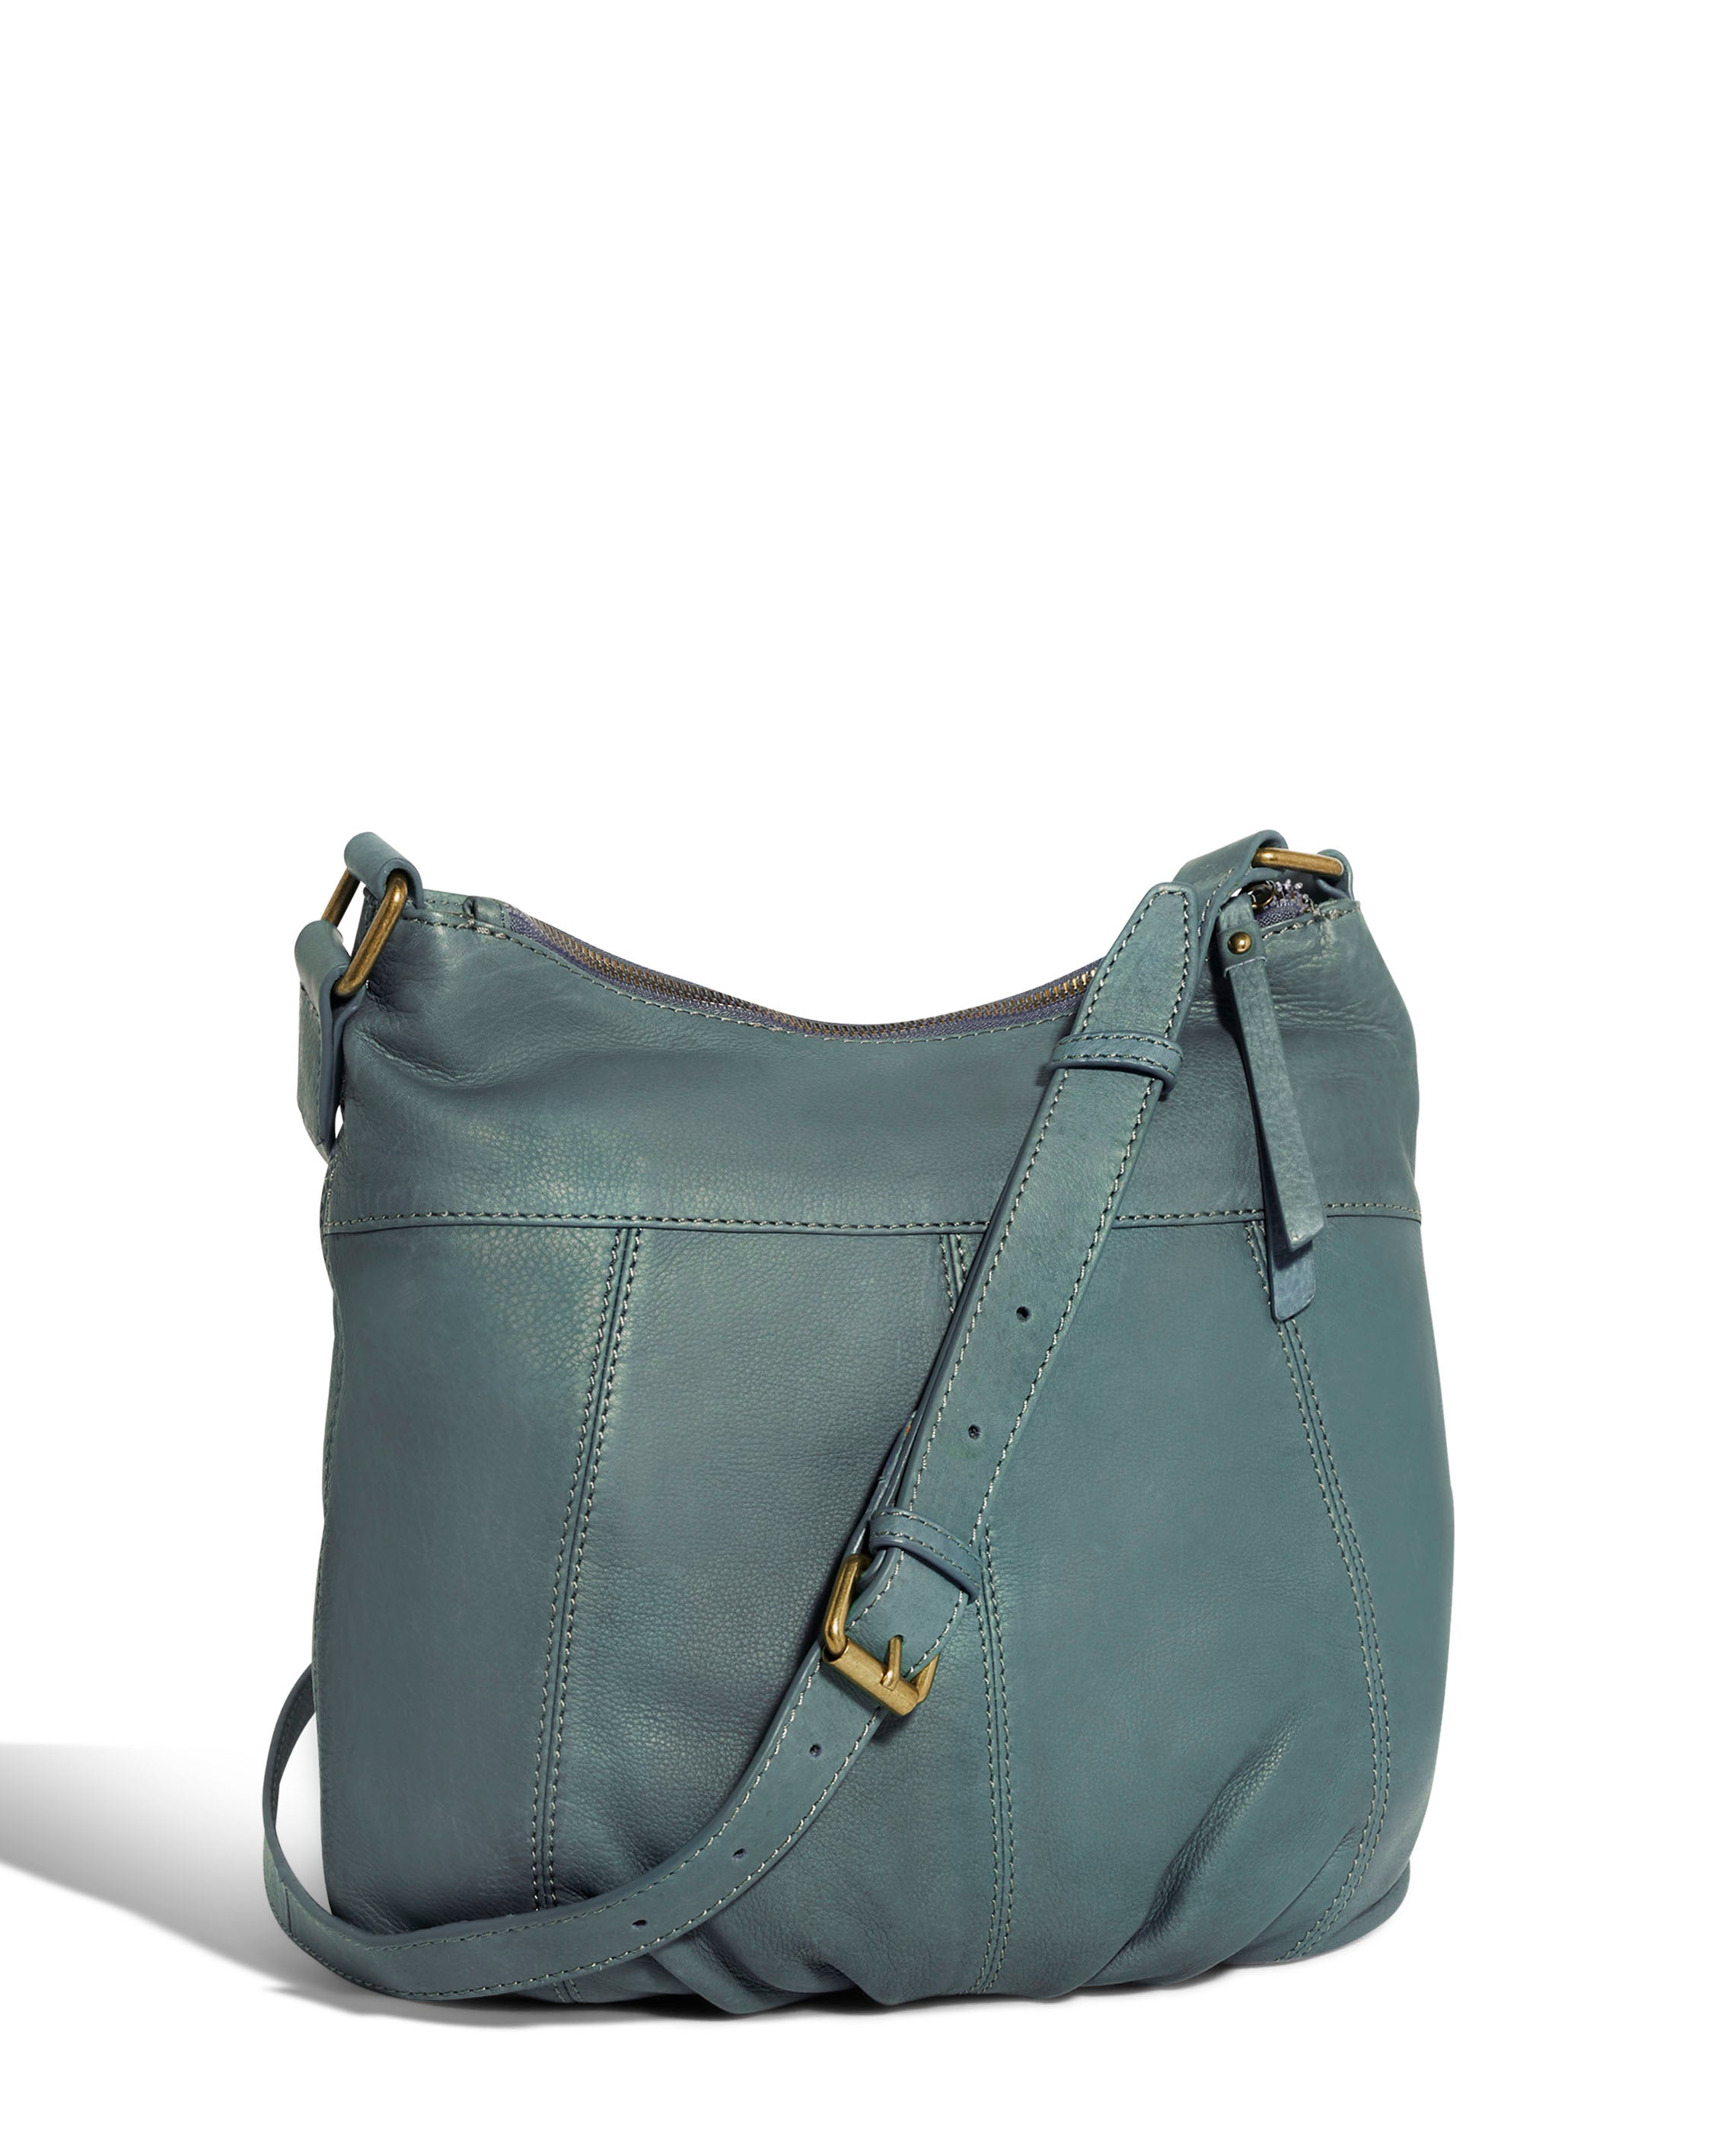 Asge Top Handle Purse for Women Crossbody Handbags Leather Shoulder Bag  (Large) 